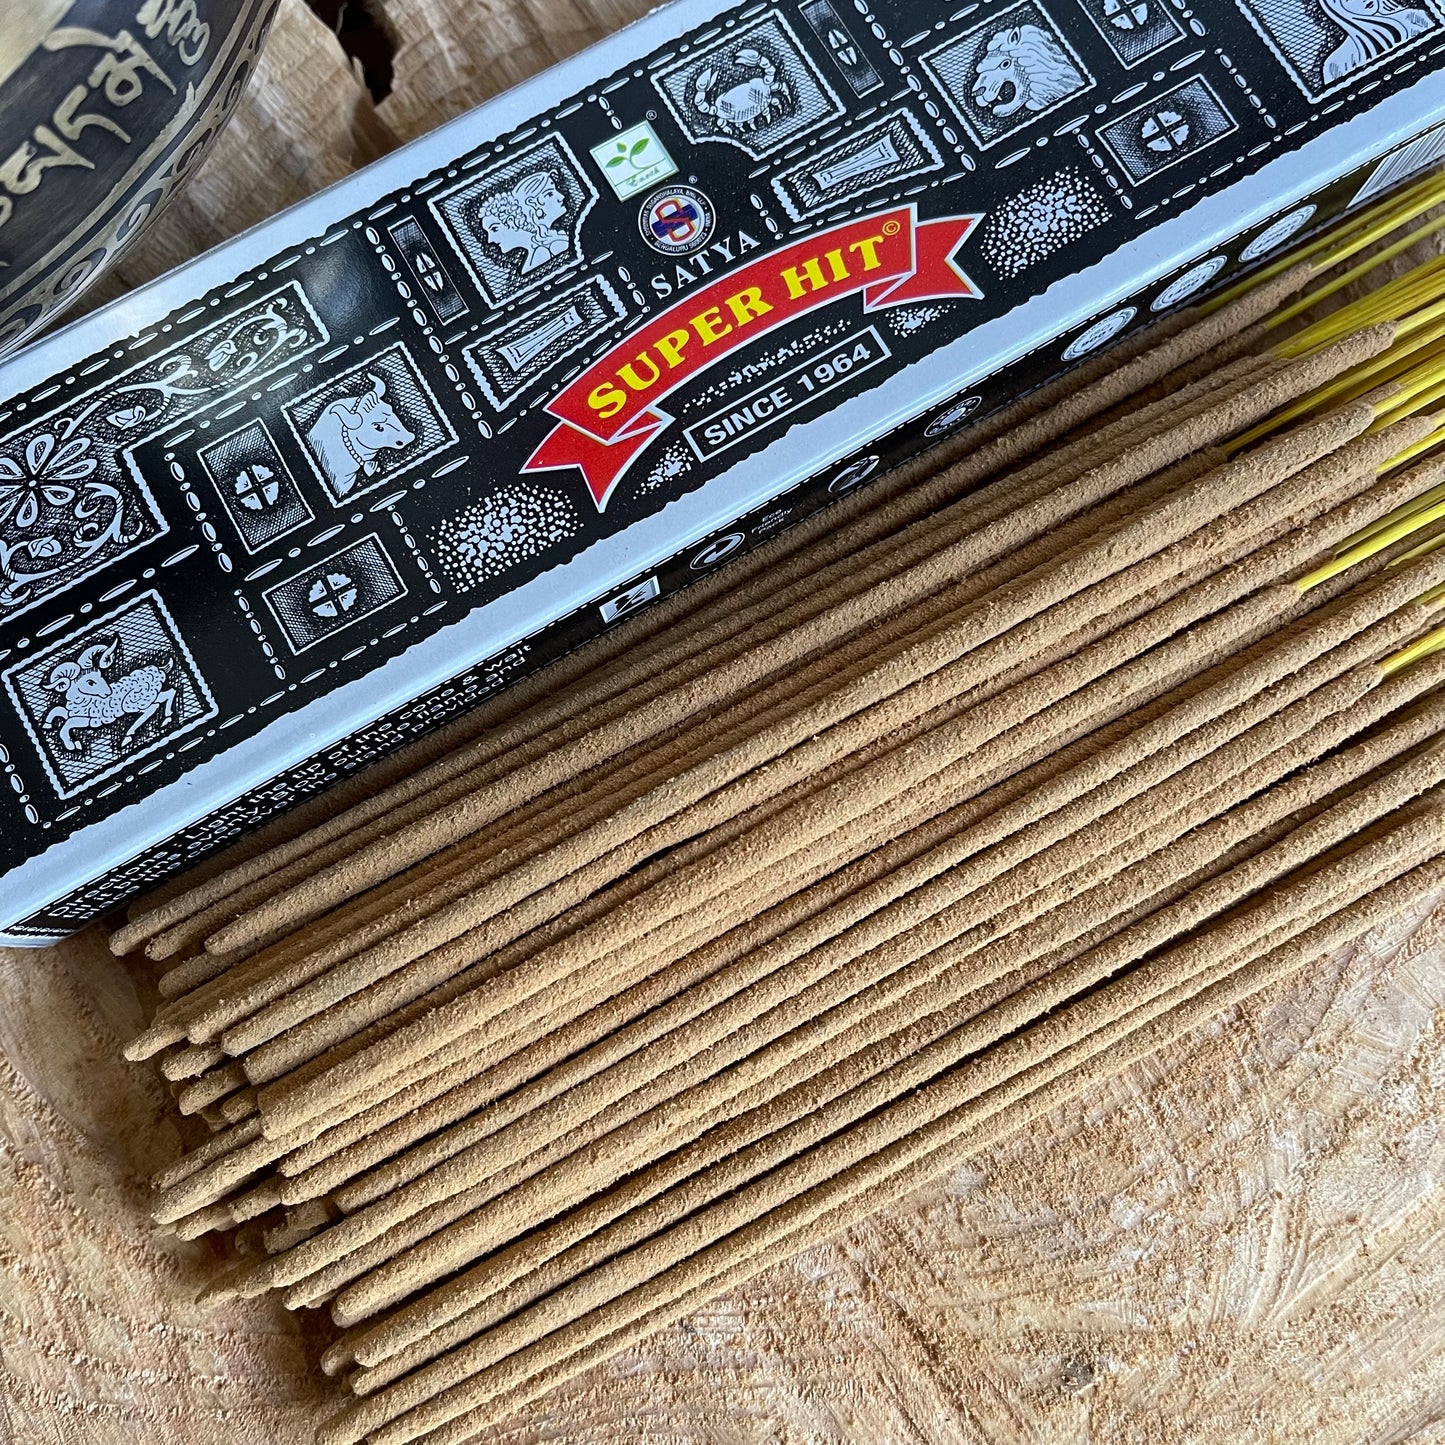 Satya Super Hit Incense 100 gm Large Box